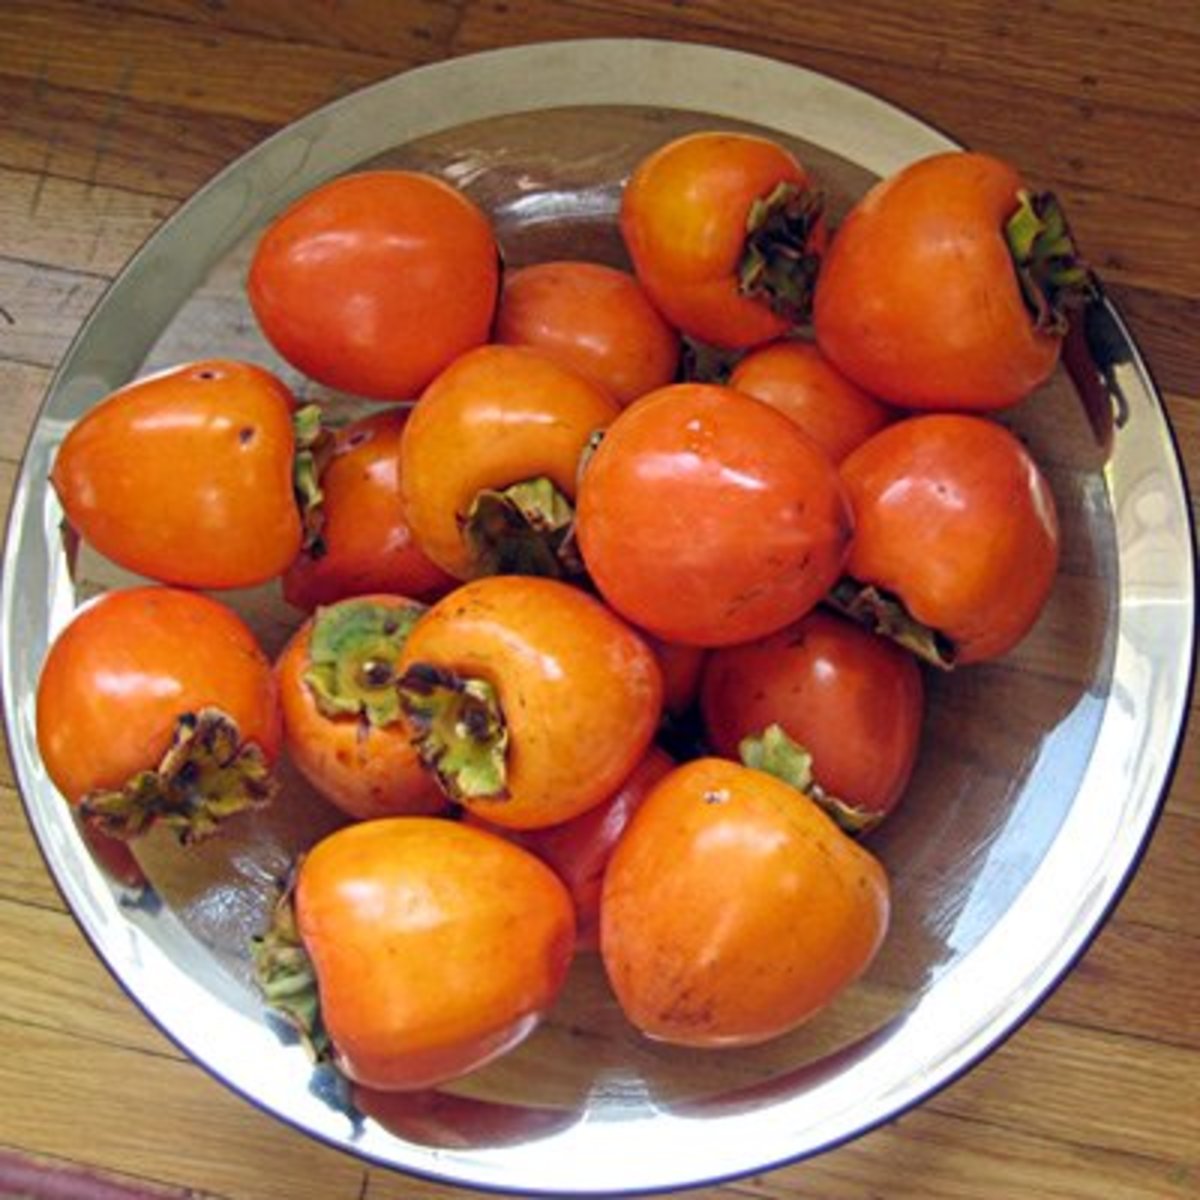 Bowl of Hachiya persimmons